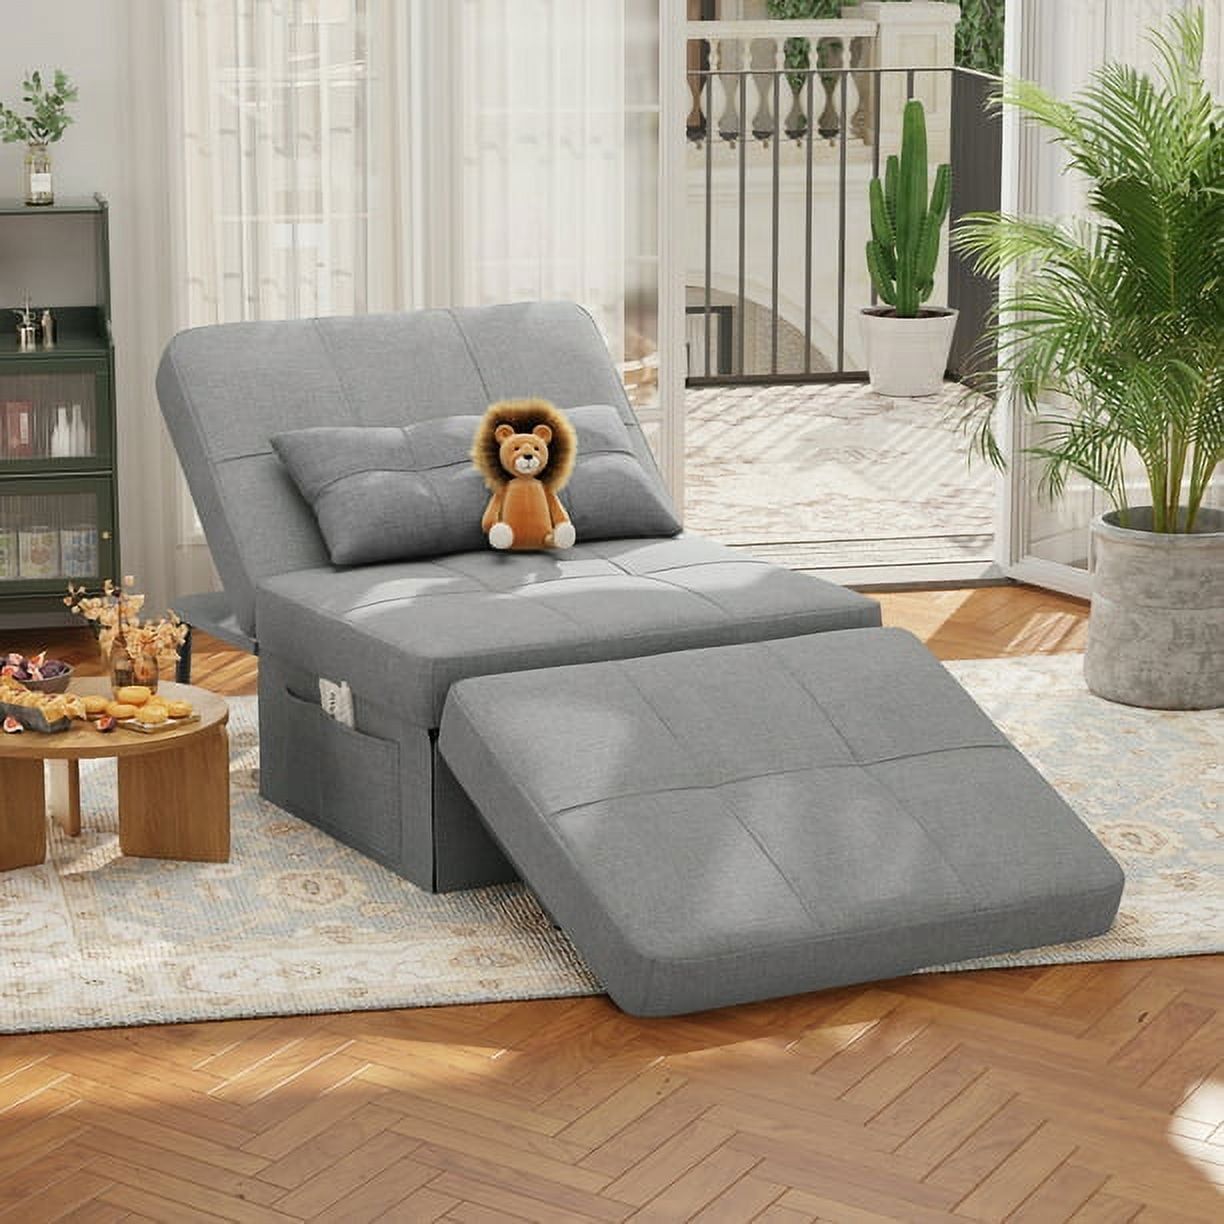 Chair Bed, Lofka Convertible Recliner Single Sofa Bed, Free Installation,  730 Lbs, Light Gray – Walmart Throughout Convertible Light Gray Chair Beds (Photo 1 of 15)